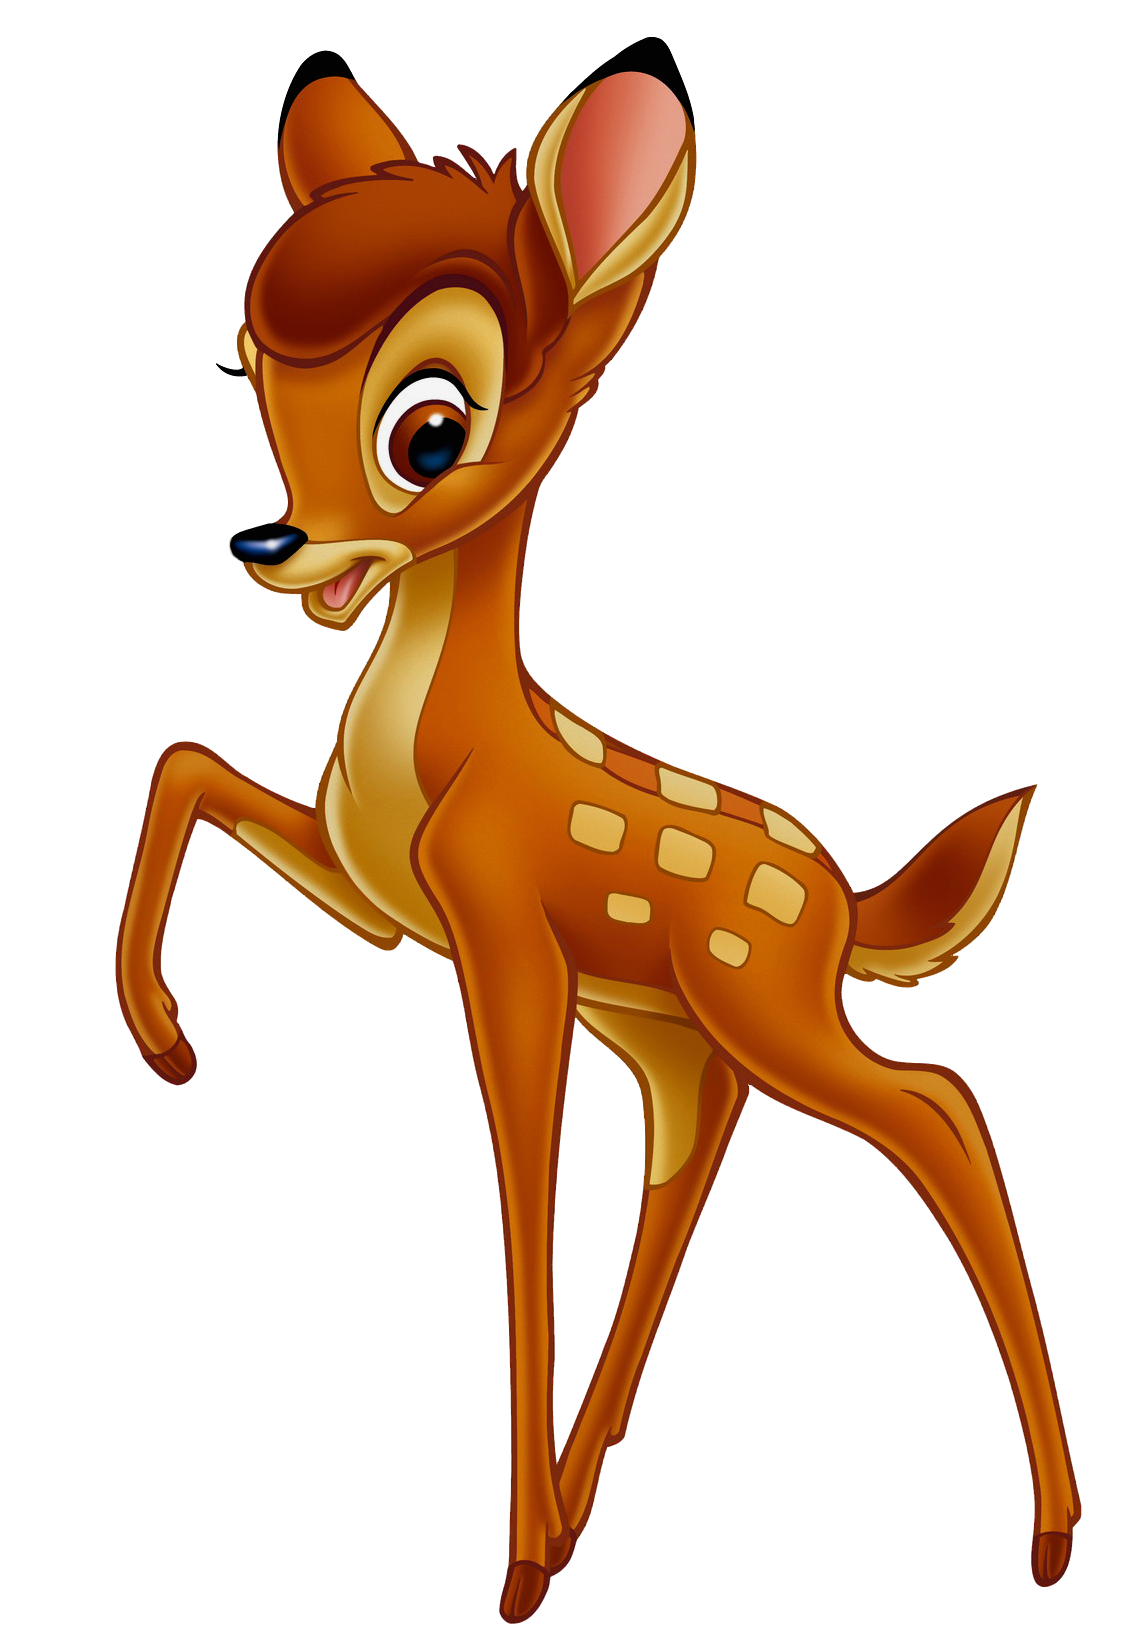 Bambi | Fictional Characters Wiki | FANDOM powered by Wikia